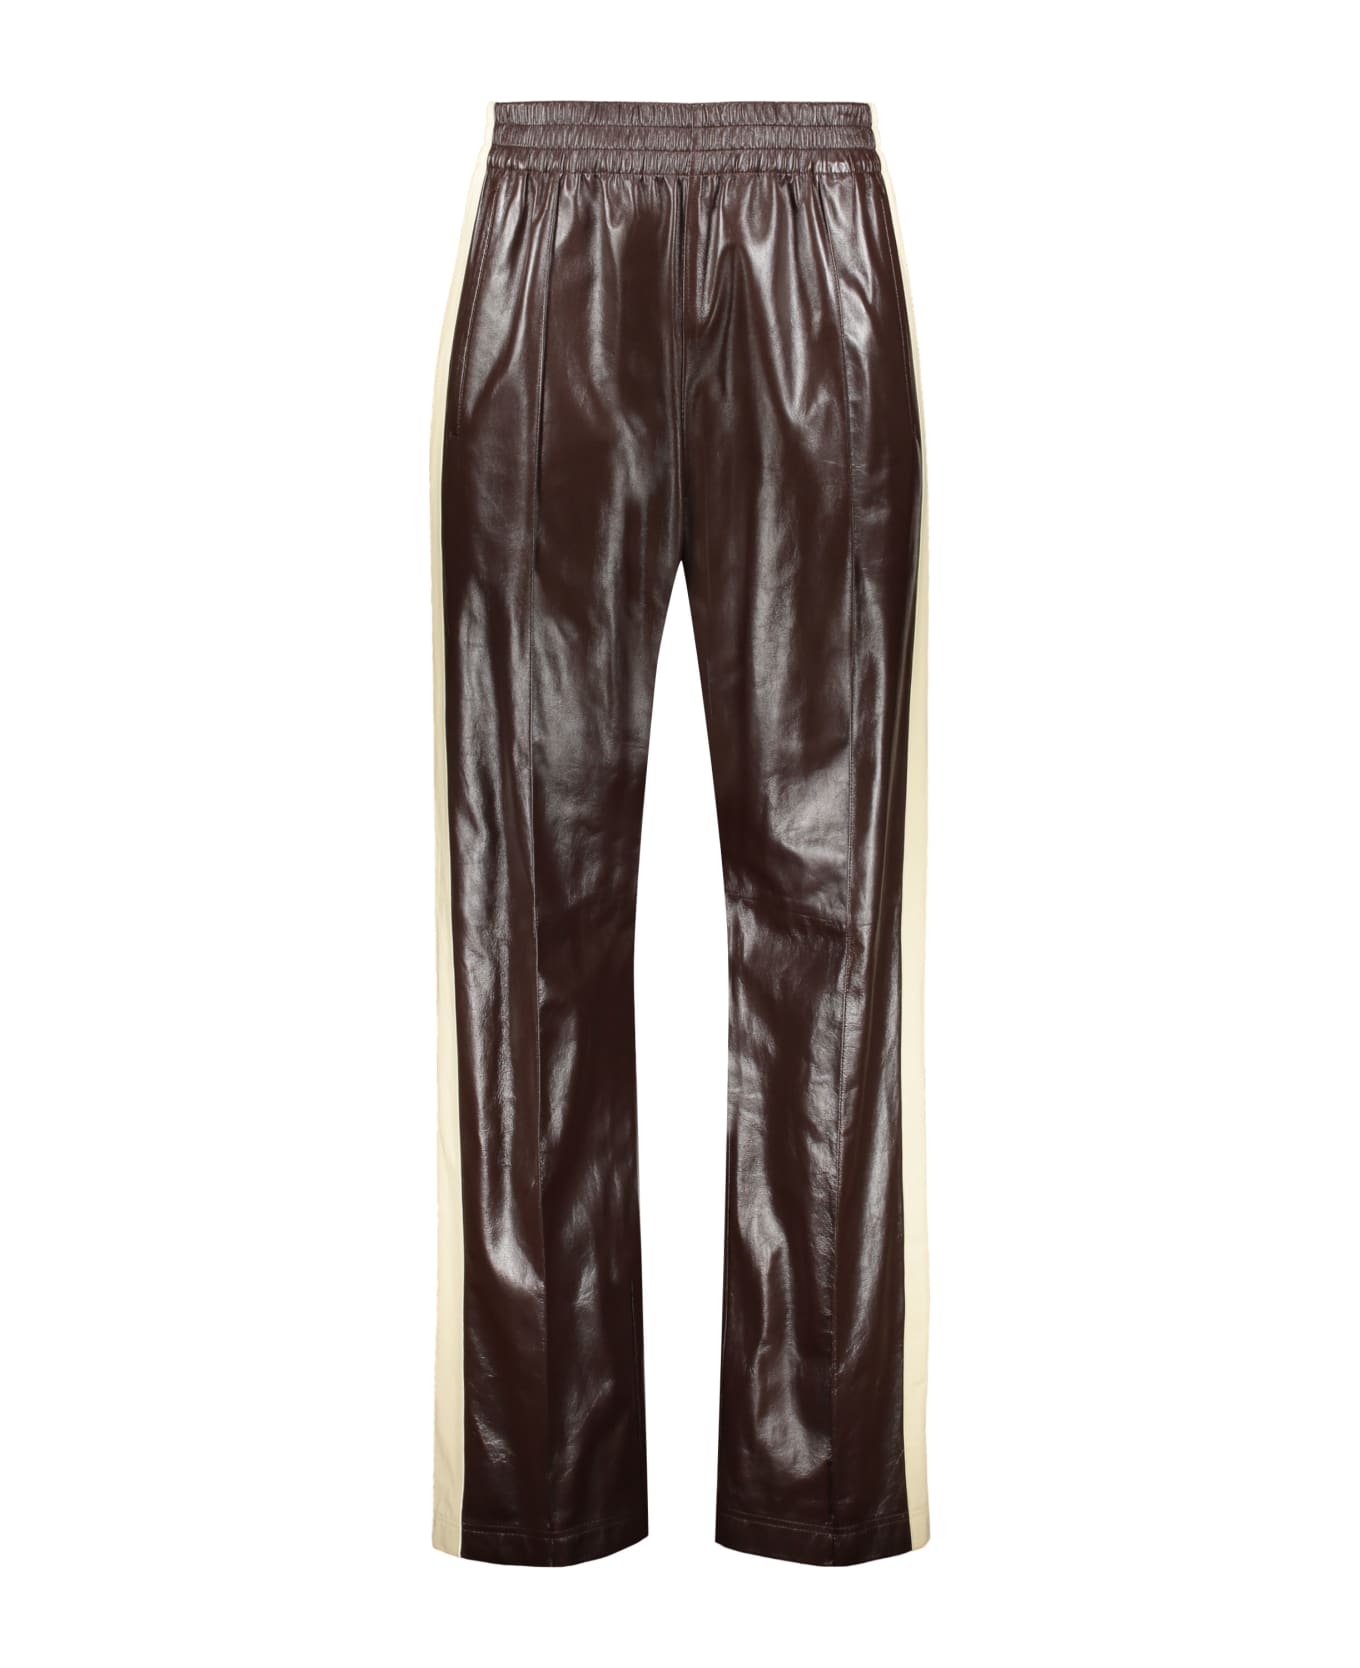 Bottega Veneta Leather Pants - brown